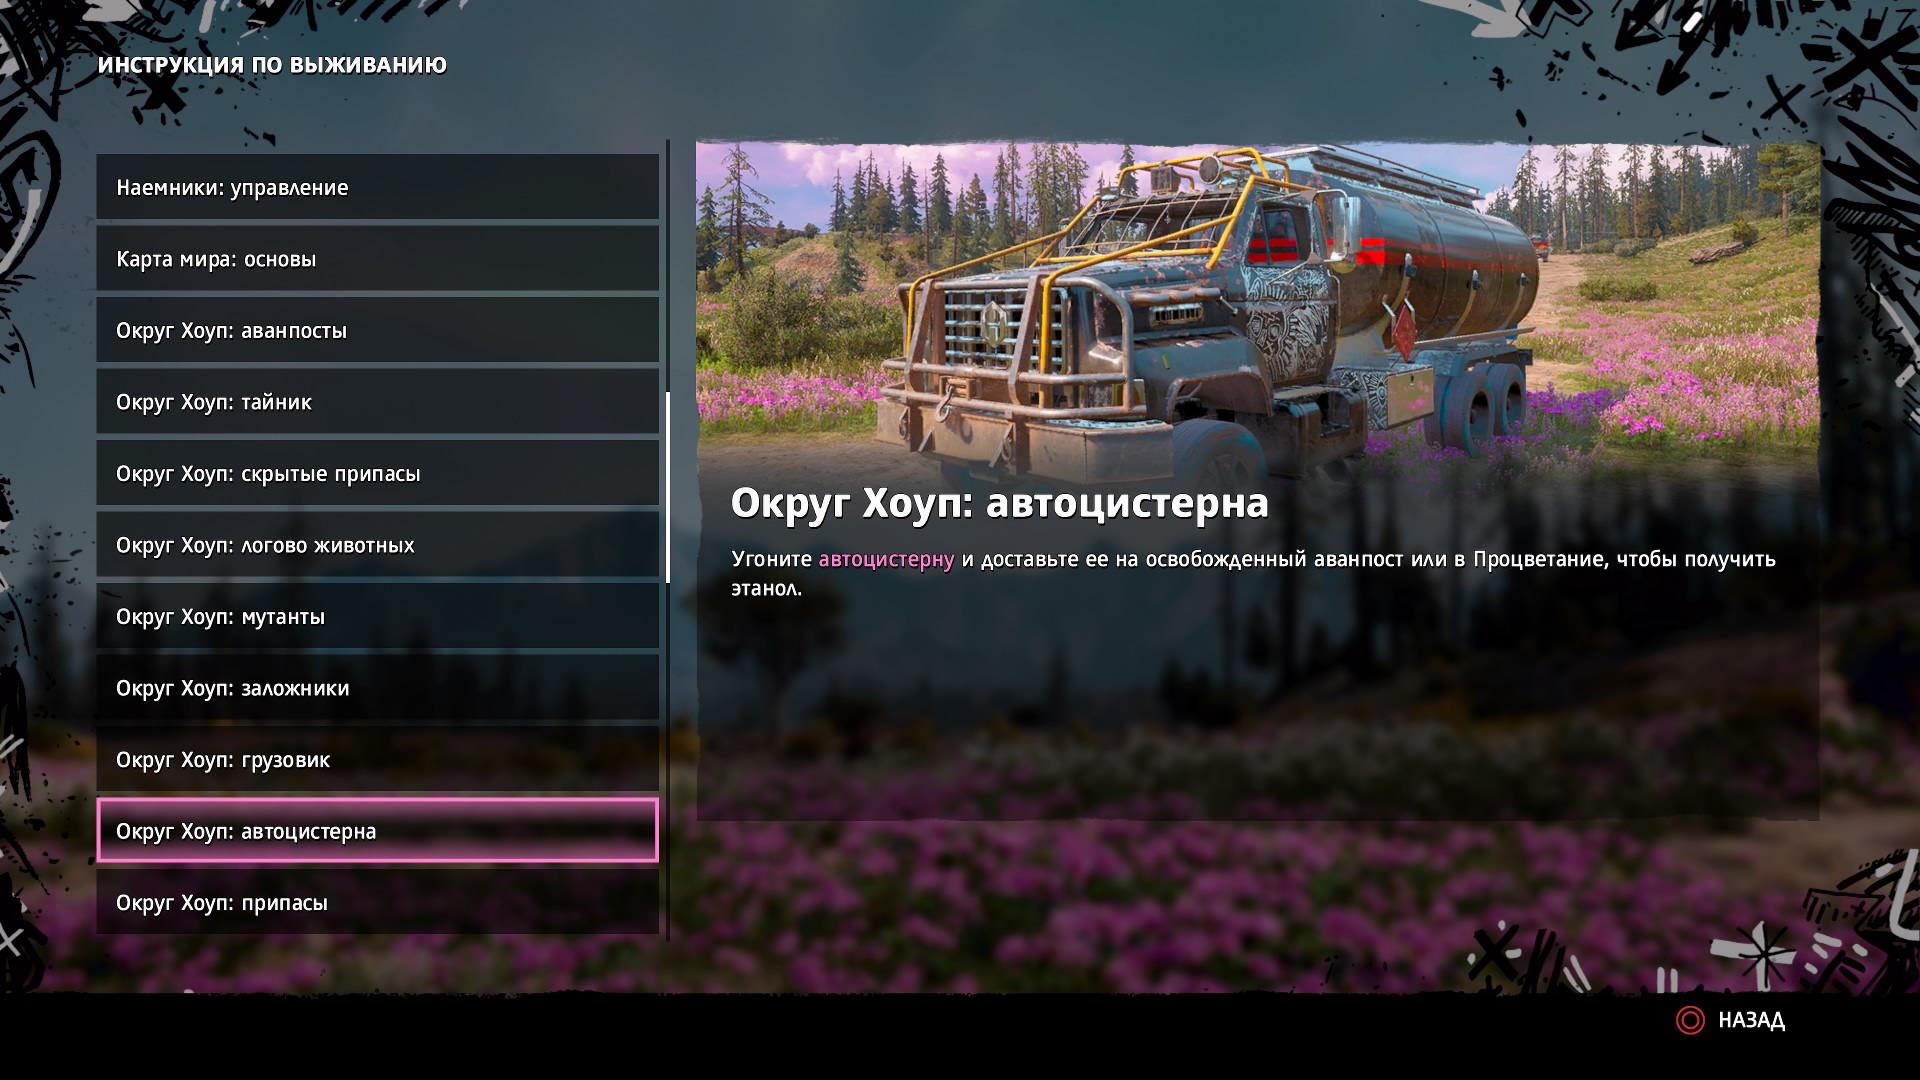 Коды на давн. Far Cry 5 грузовик. Этанол в фар край Нью давн. Автоцистерны в фар край. Far Cry New Dawn транспорт грузовик с каркасом.